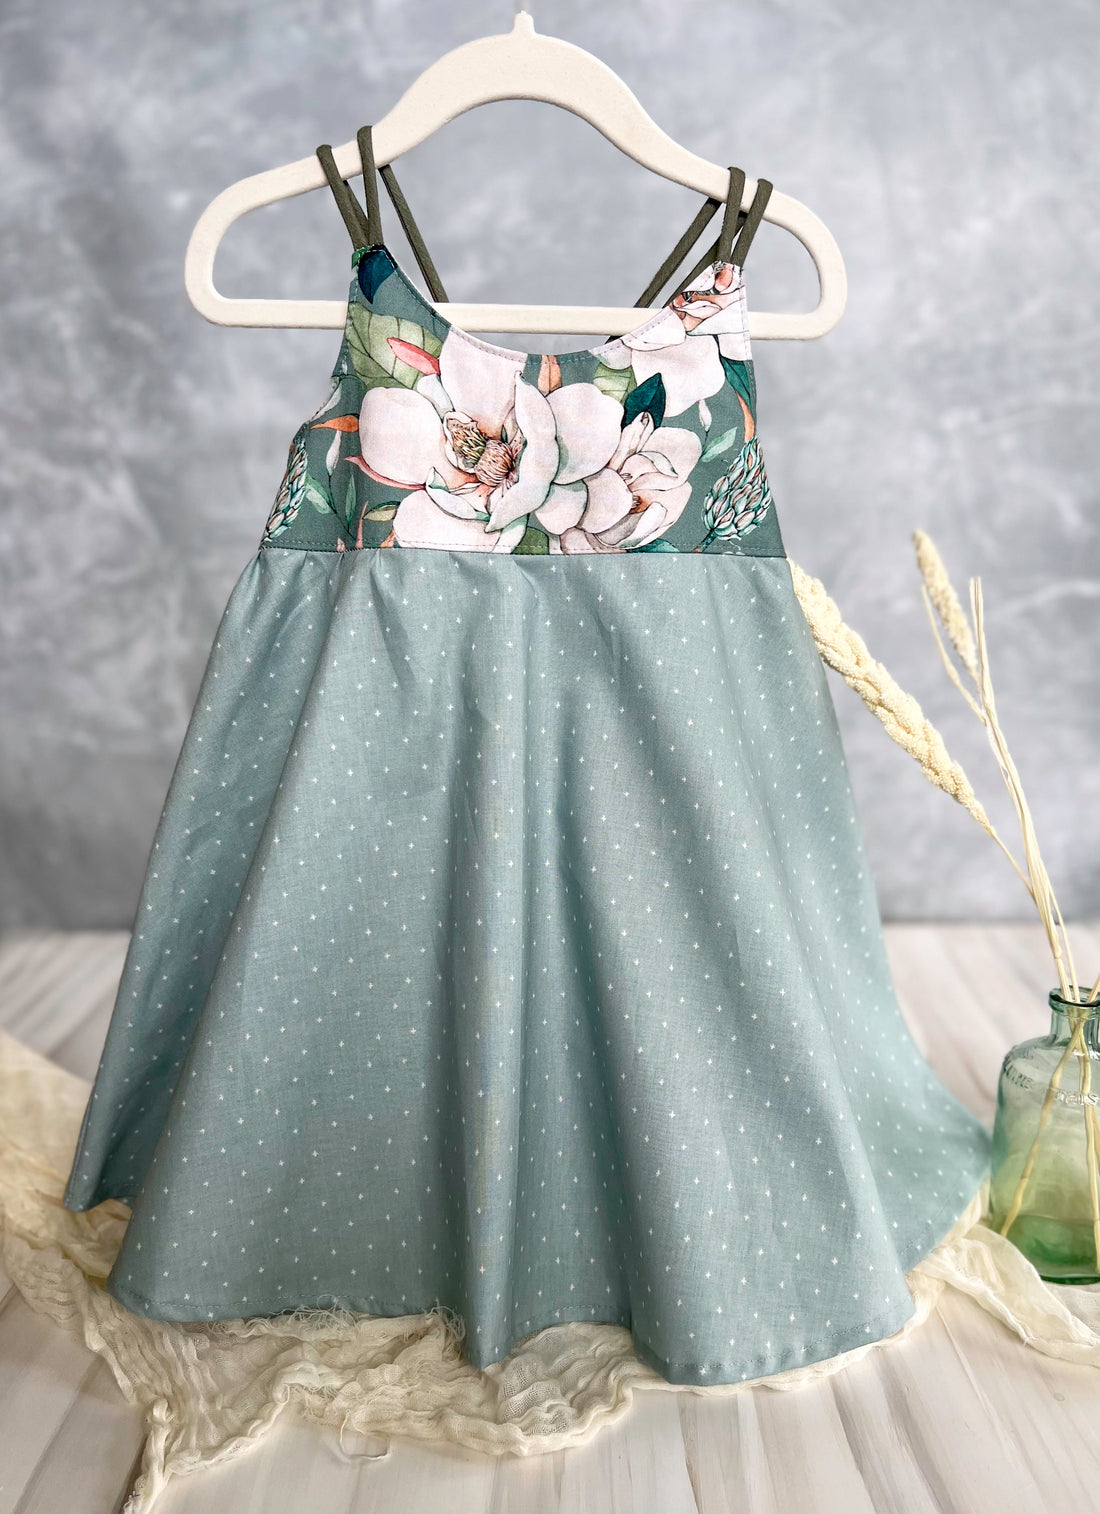 SALE - Magnolia Girls Dress -  Twirly Dress - Toddler Dress - Baby Girl Dress - Made in Maui,  Hawaii